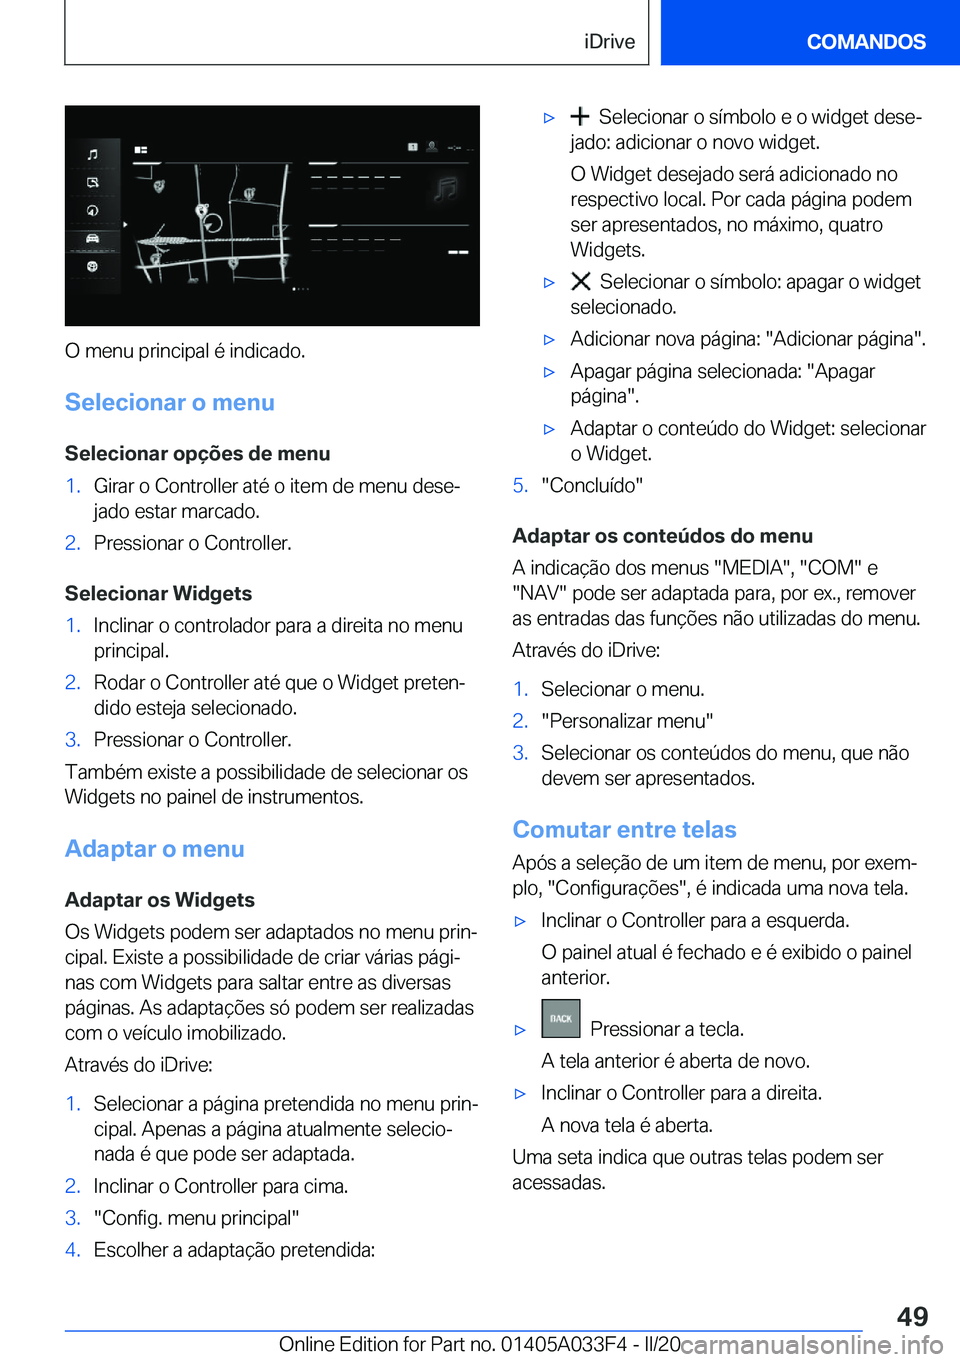 BMW X5 M 2020  Manual do condutor (in Portuguese) �O��m�e�n�u��p�r�i�n�c�i�p�a�l��é��i�n�d�i�c�a�d�o�.�S�e�l�e�c�i�o�n�a�r��o��m�e�n�u
�S�e�l�e�c�i�o�n�a�r��o�p�